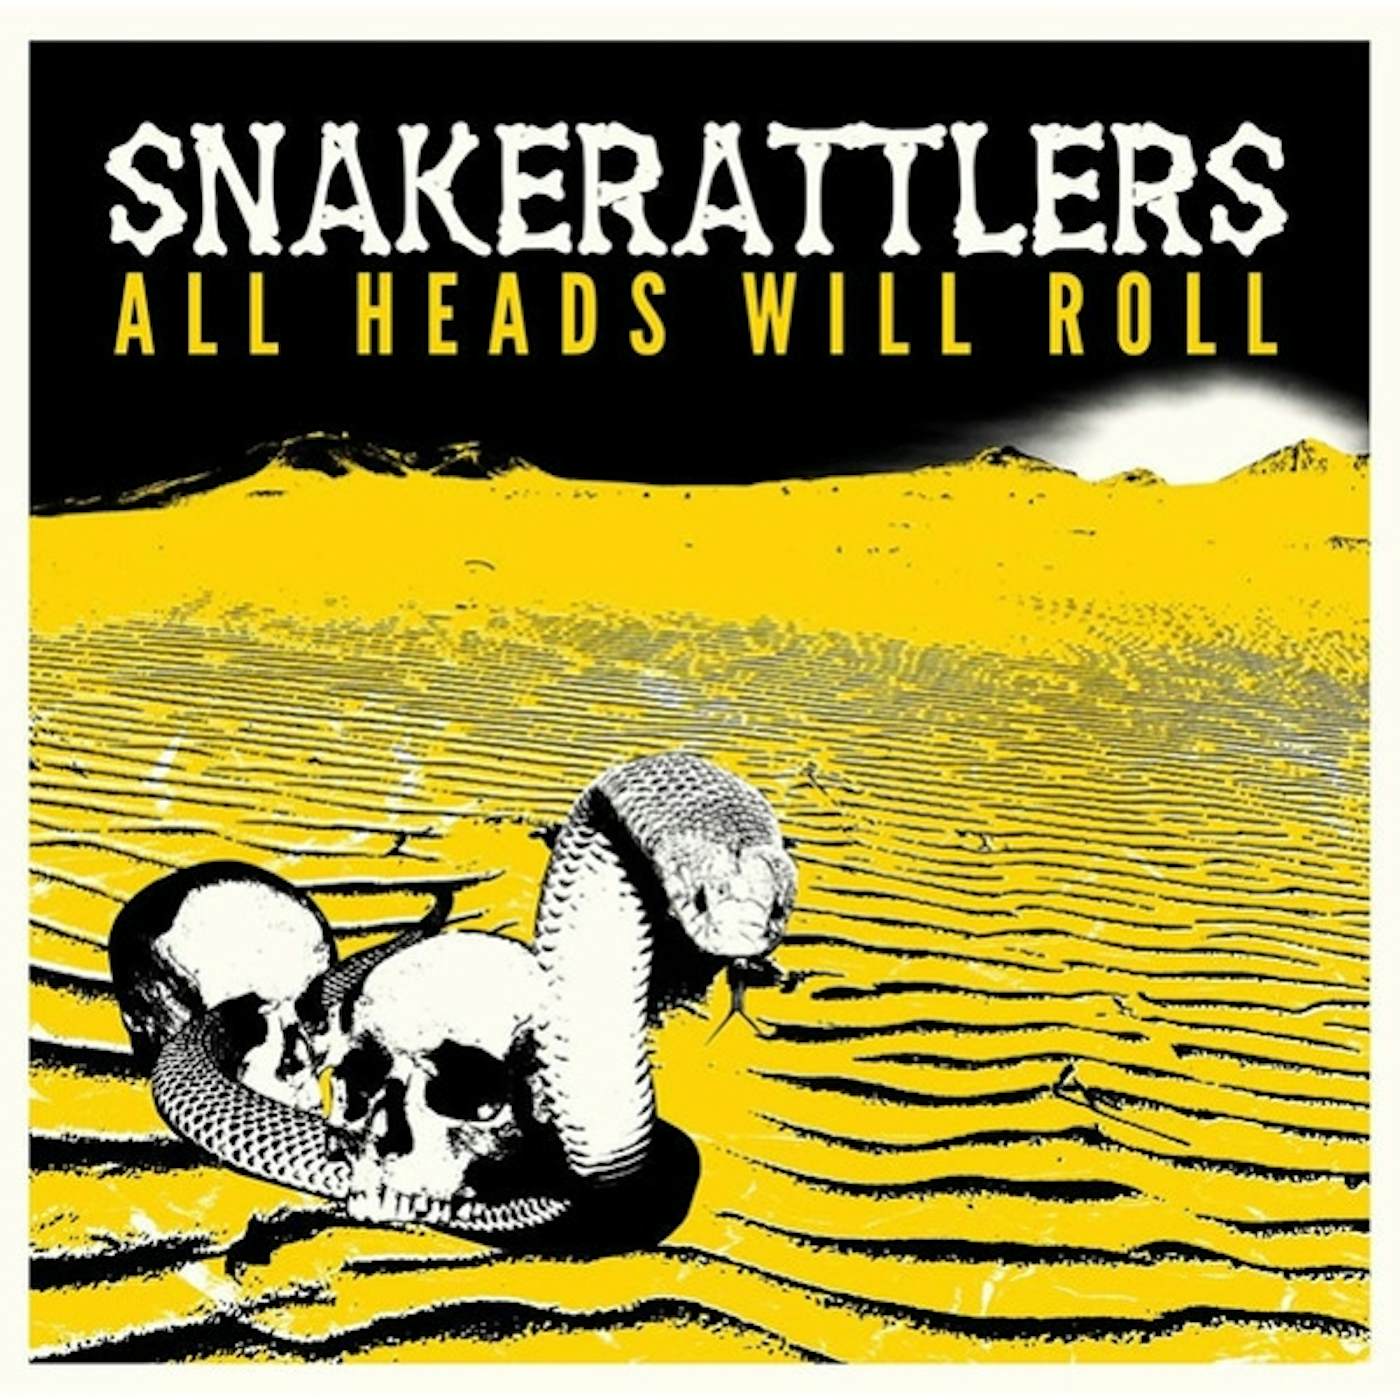 Snakerattlers All Heads Will Roll Vinyl Record